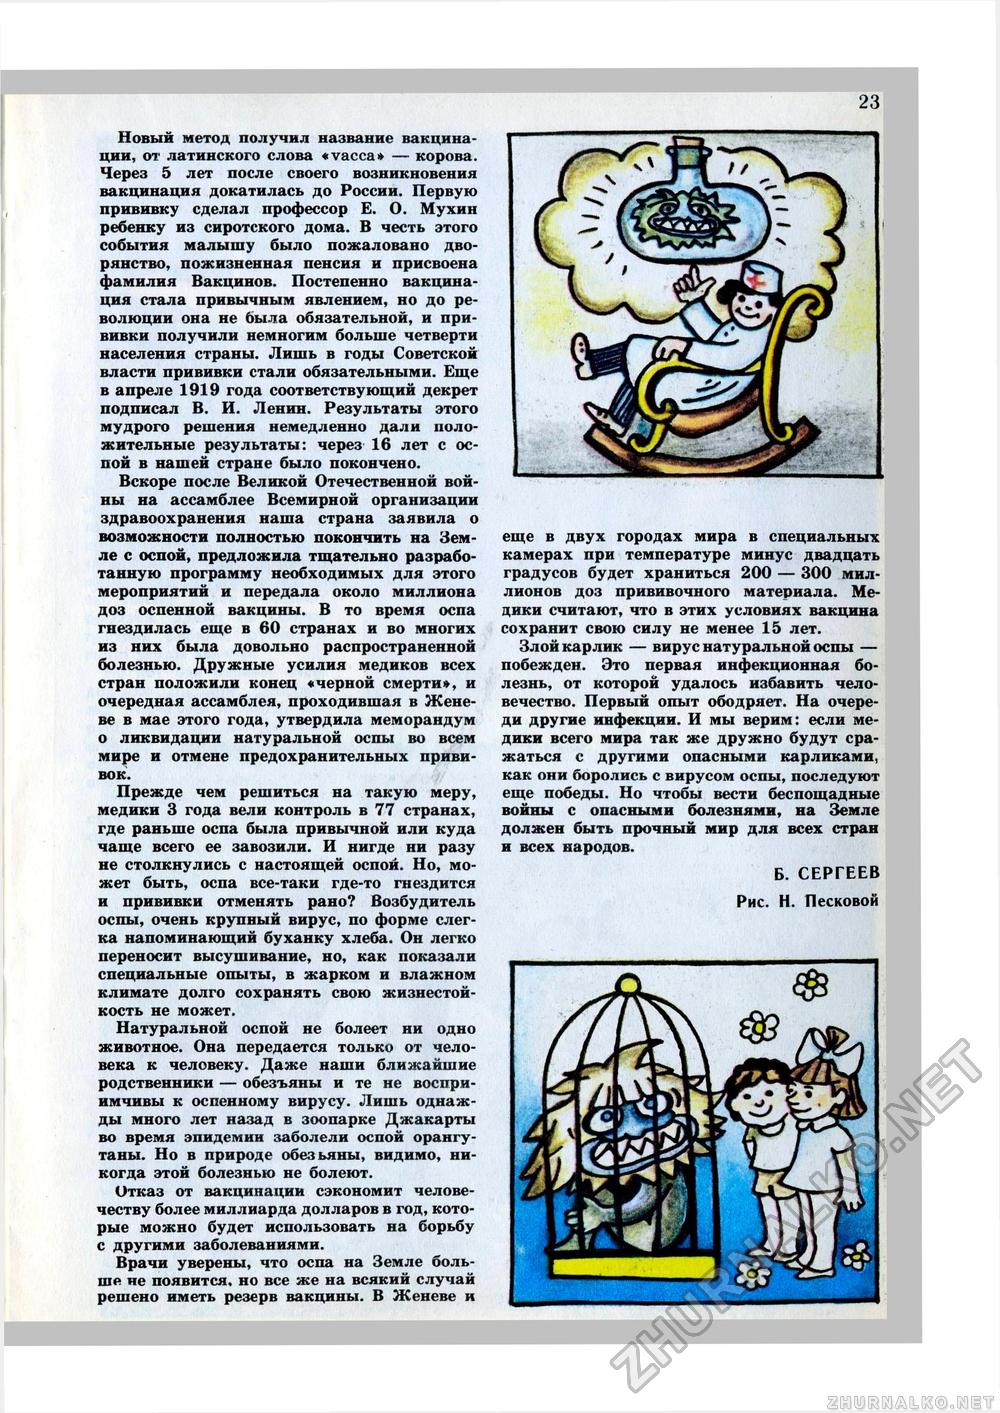 Юный Натуралист 1980-11, страница 25